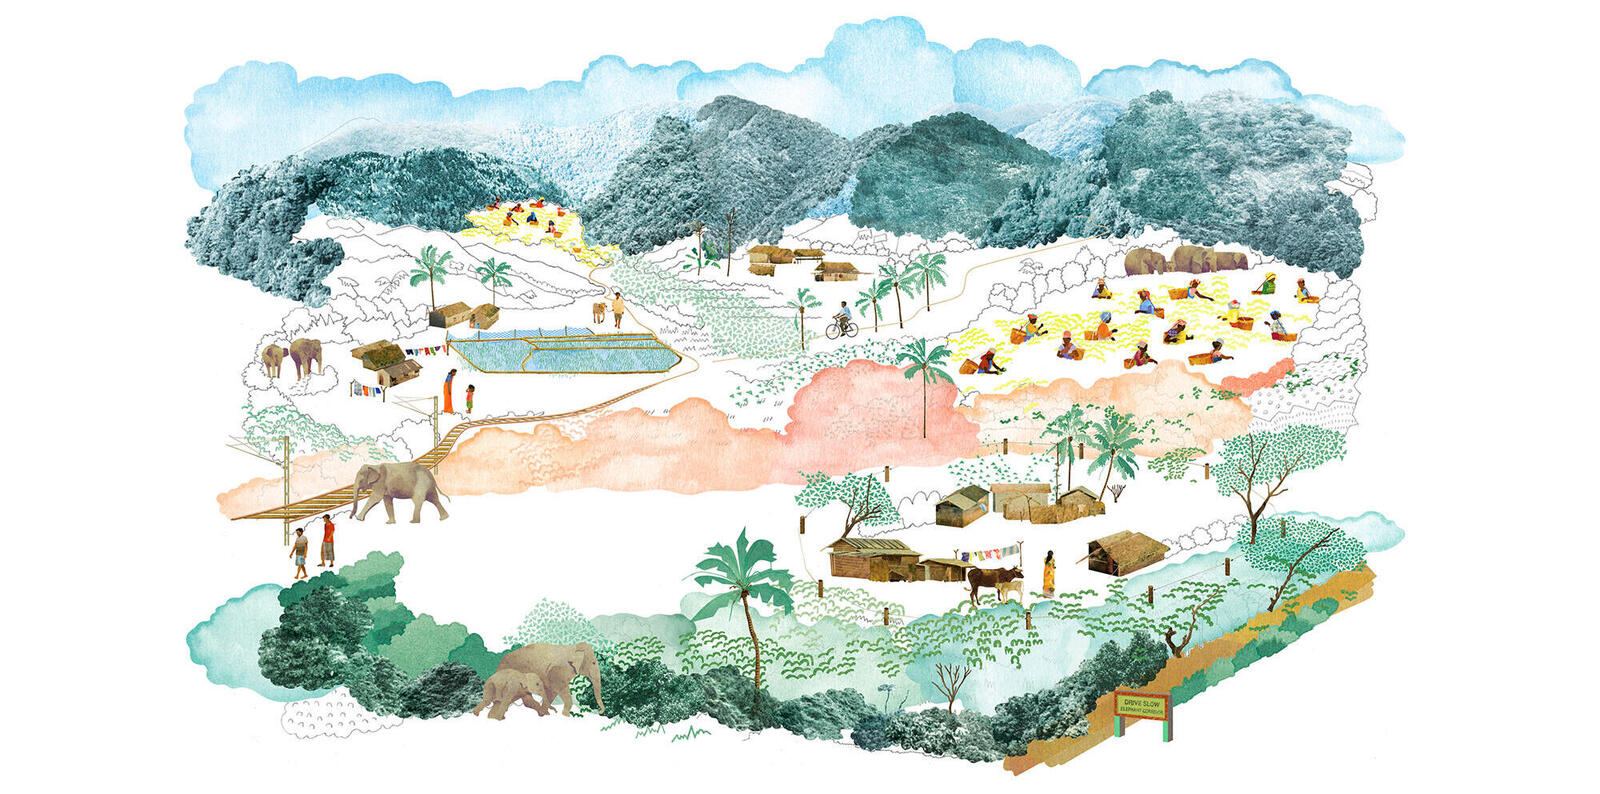 Illustration of elephants and village